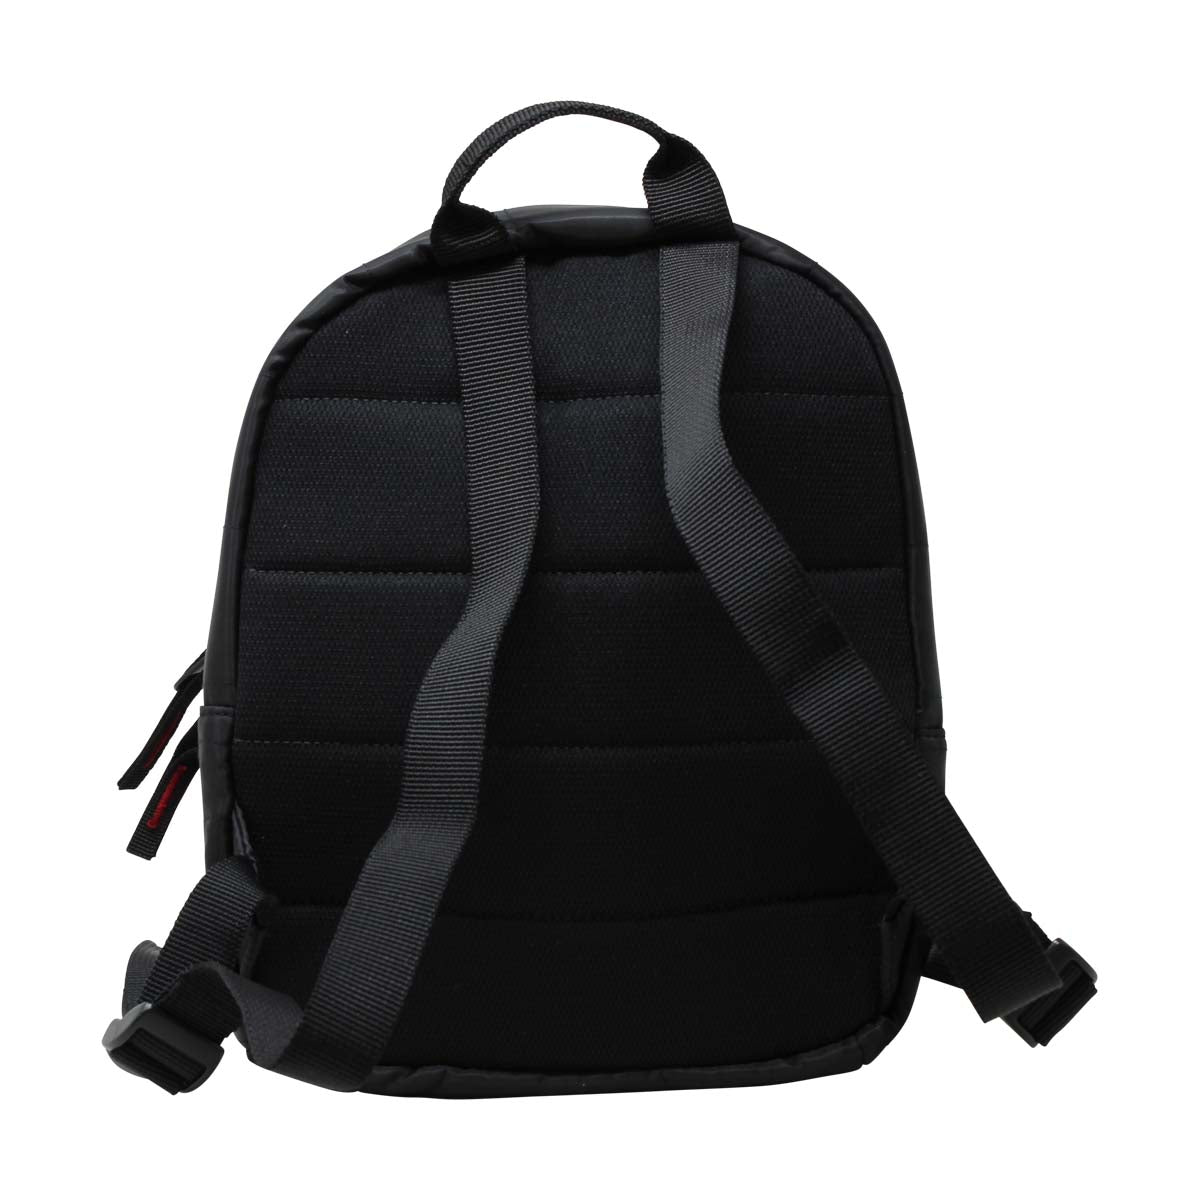 Jordan Quilted Backpack